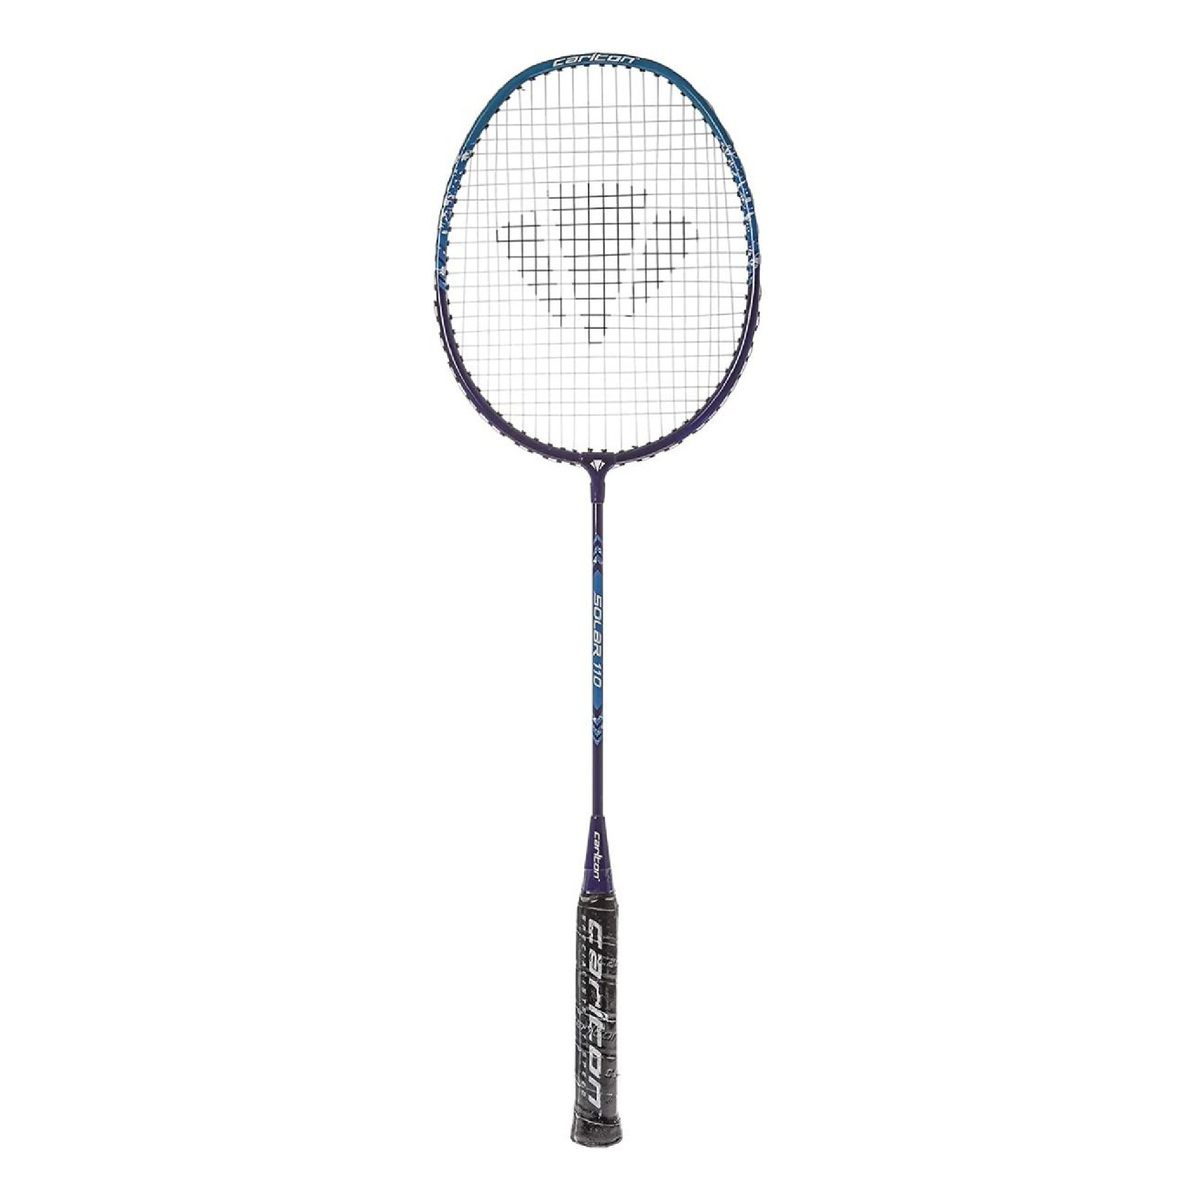 Carlton Solar 500 Badminton Racket Dunlop 13003450 Assorted Color